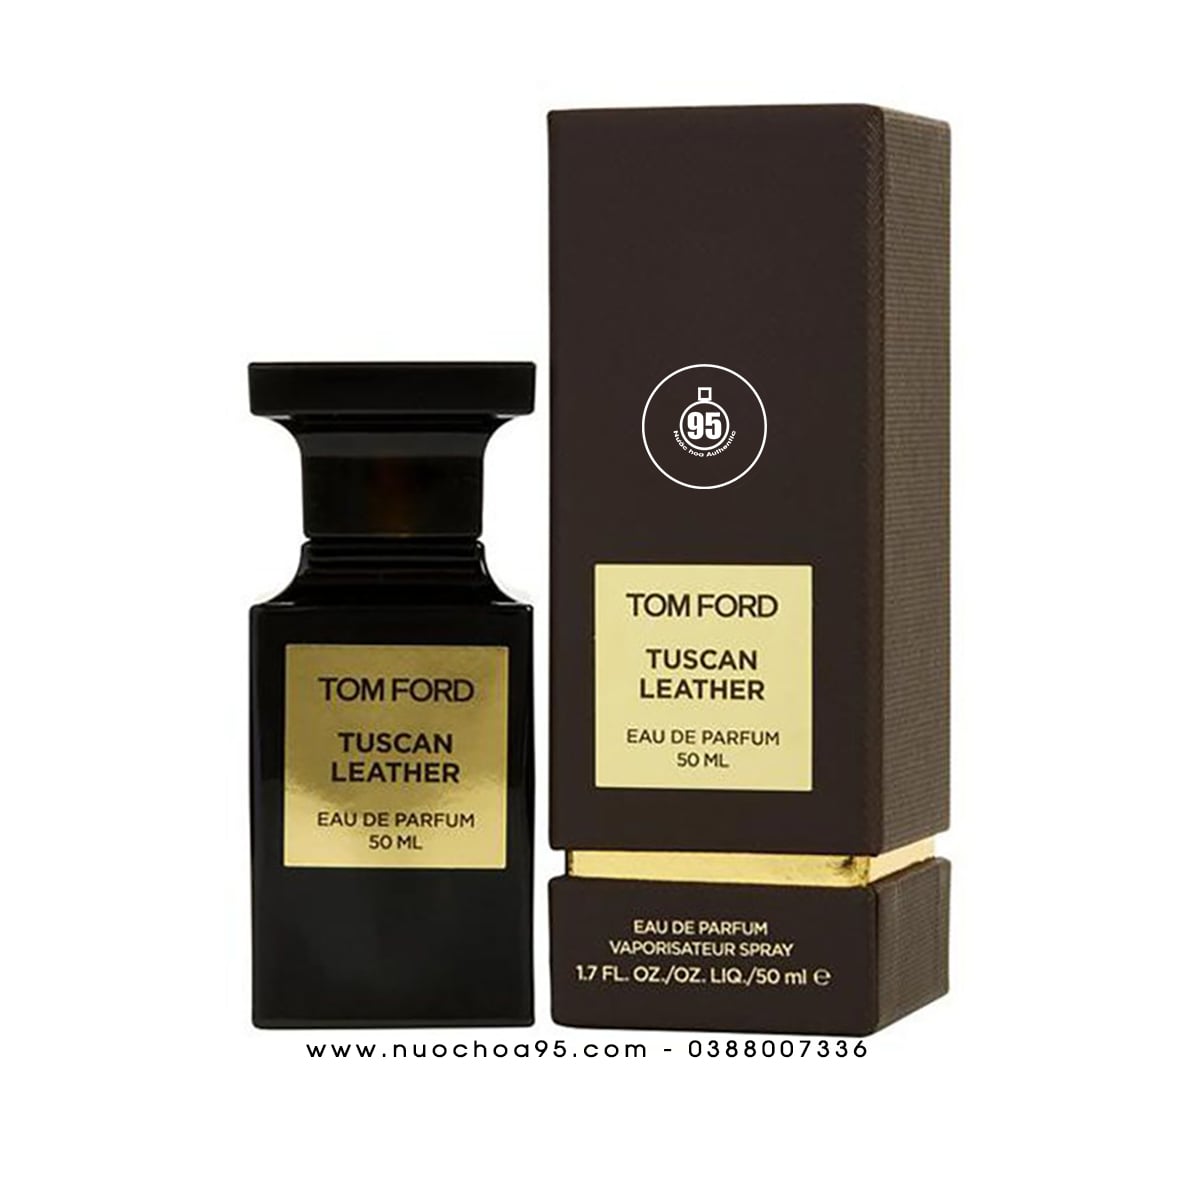 Nước hoa Tom Ford Tuscan Leather Eau De Parfum